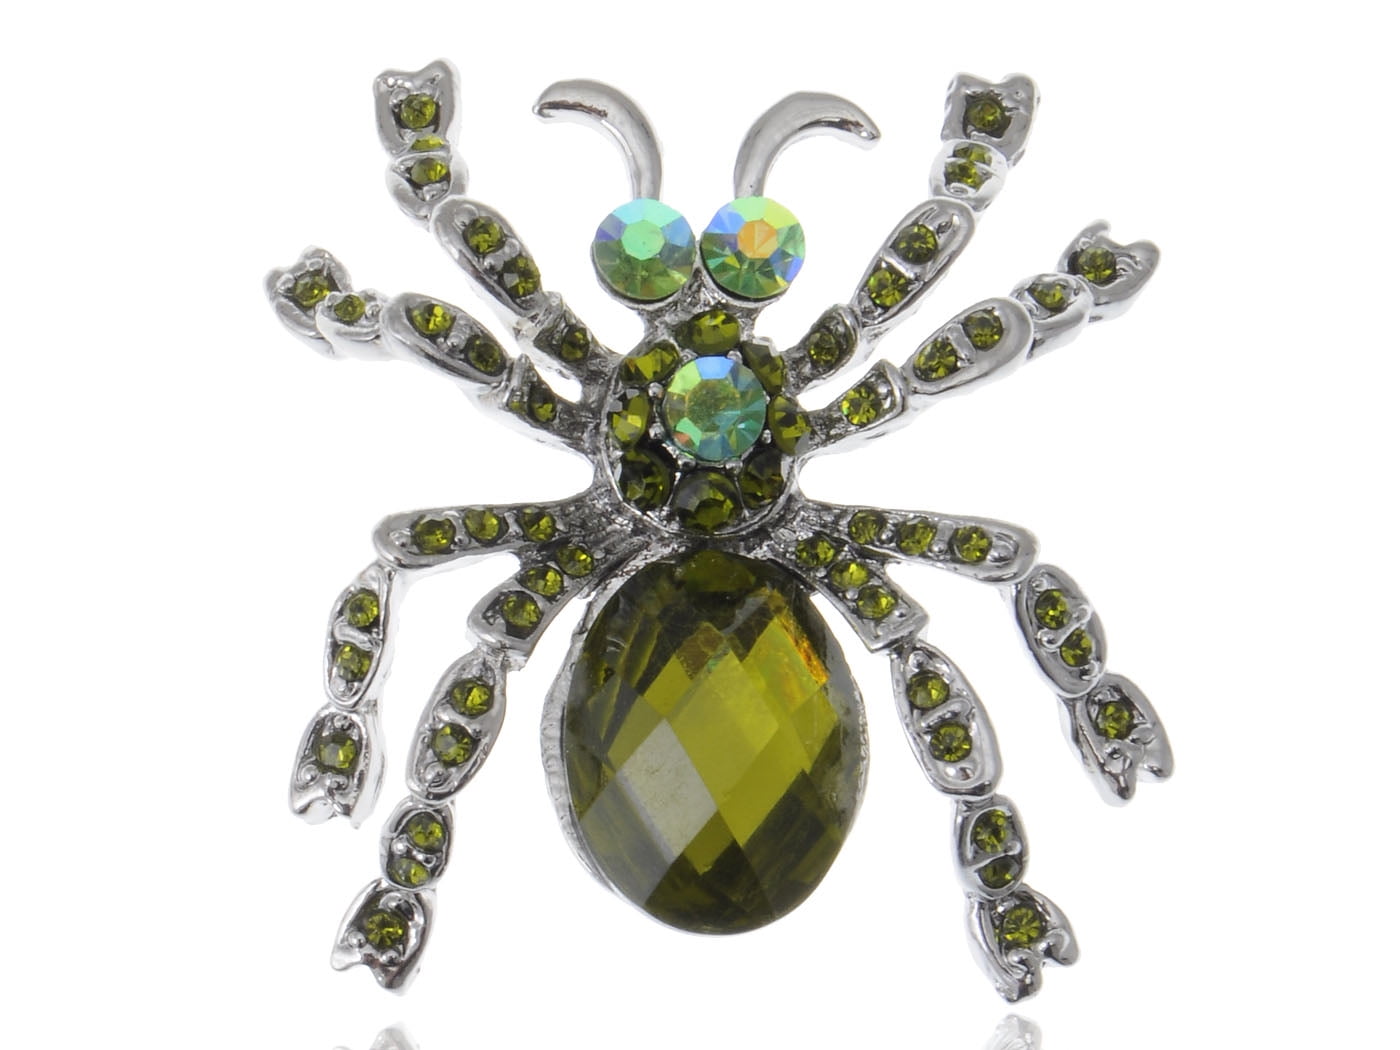 Alilang Silvery Metal Spider Bangle Bracelet Halloween